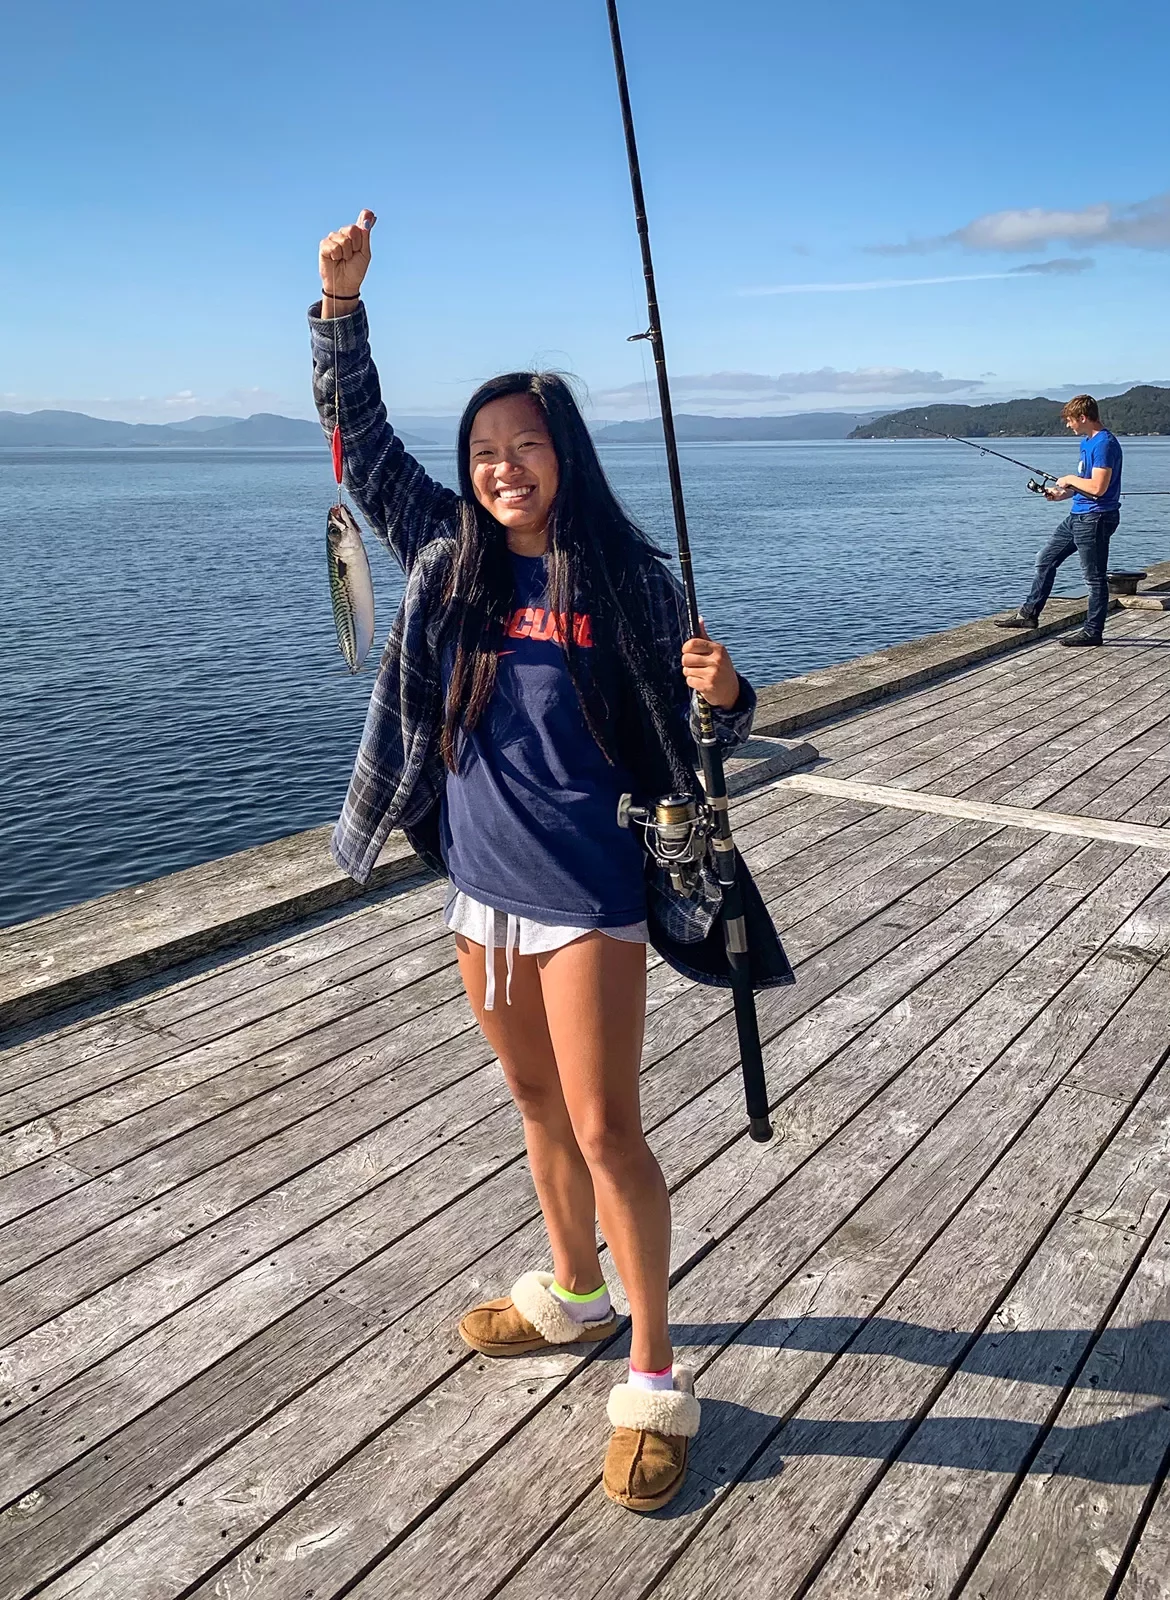 Caught Fish Fishing From Dock